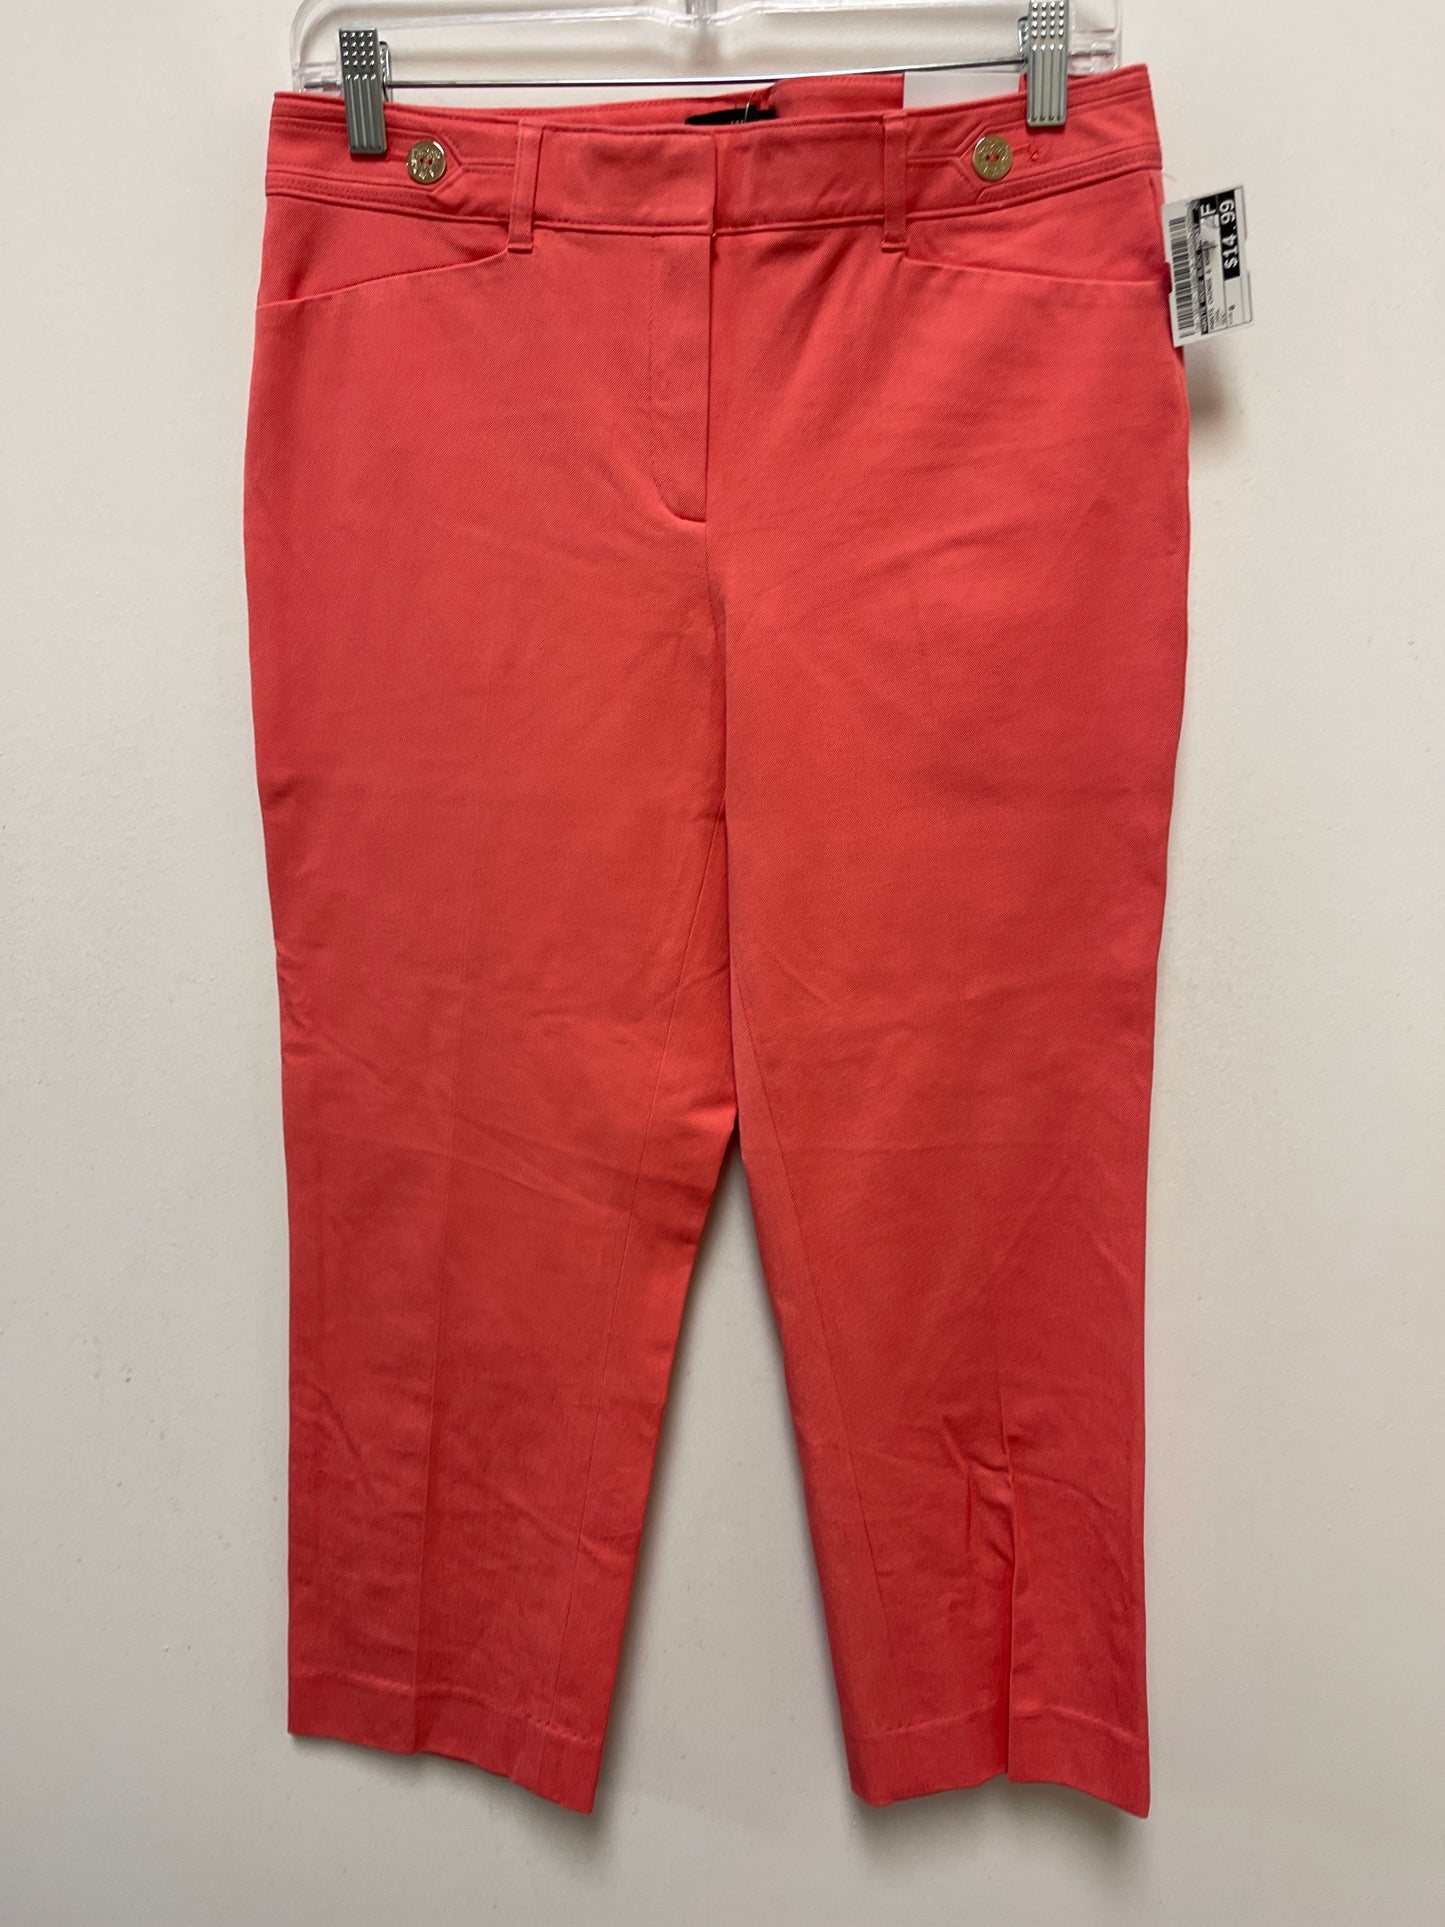 Coral Pants Chinos & Khakis White House Black Market, Size 6